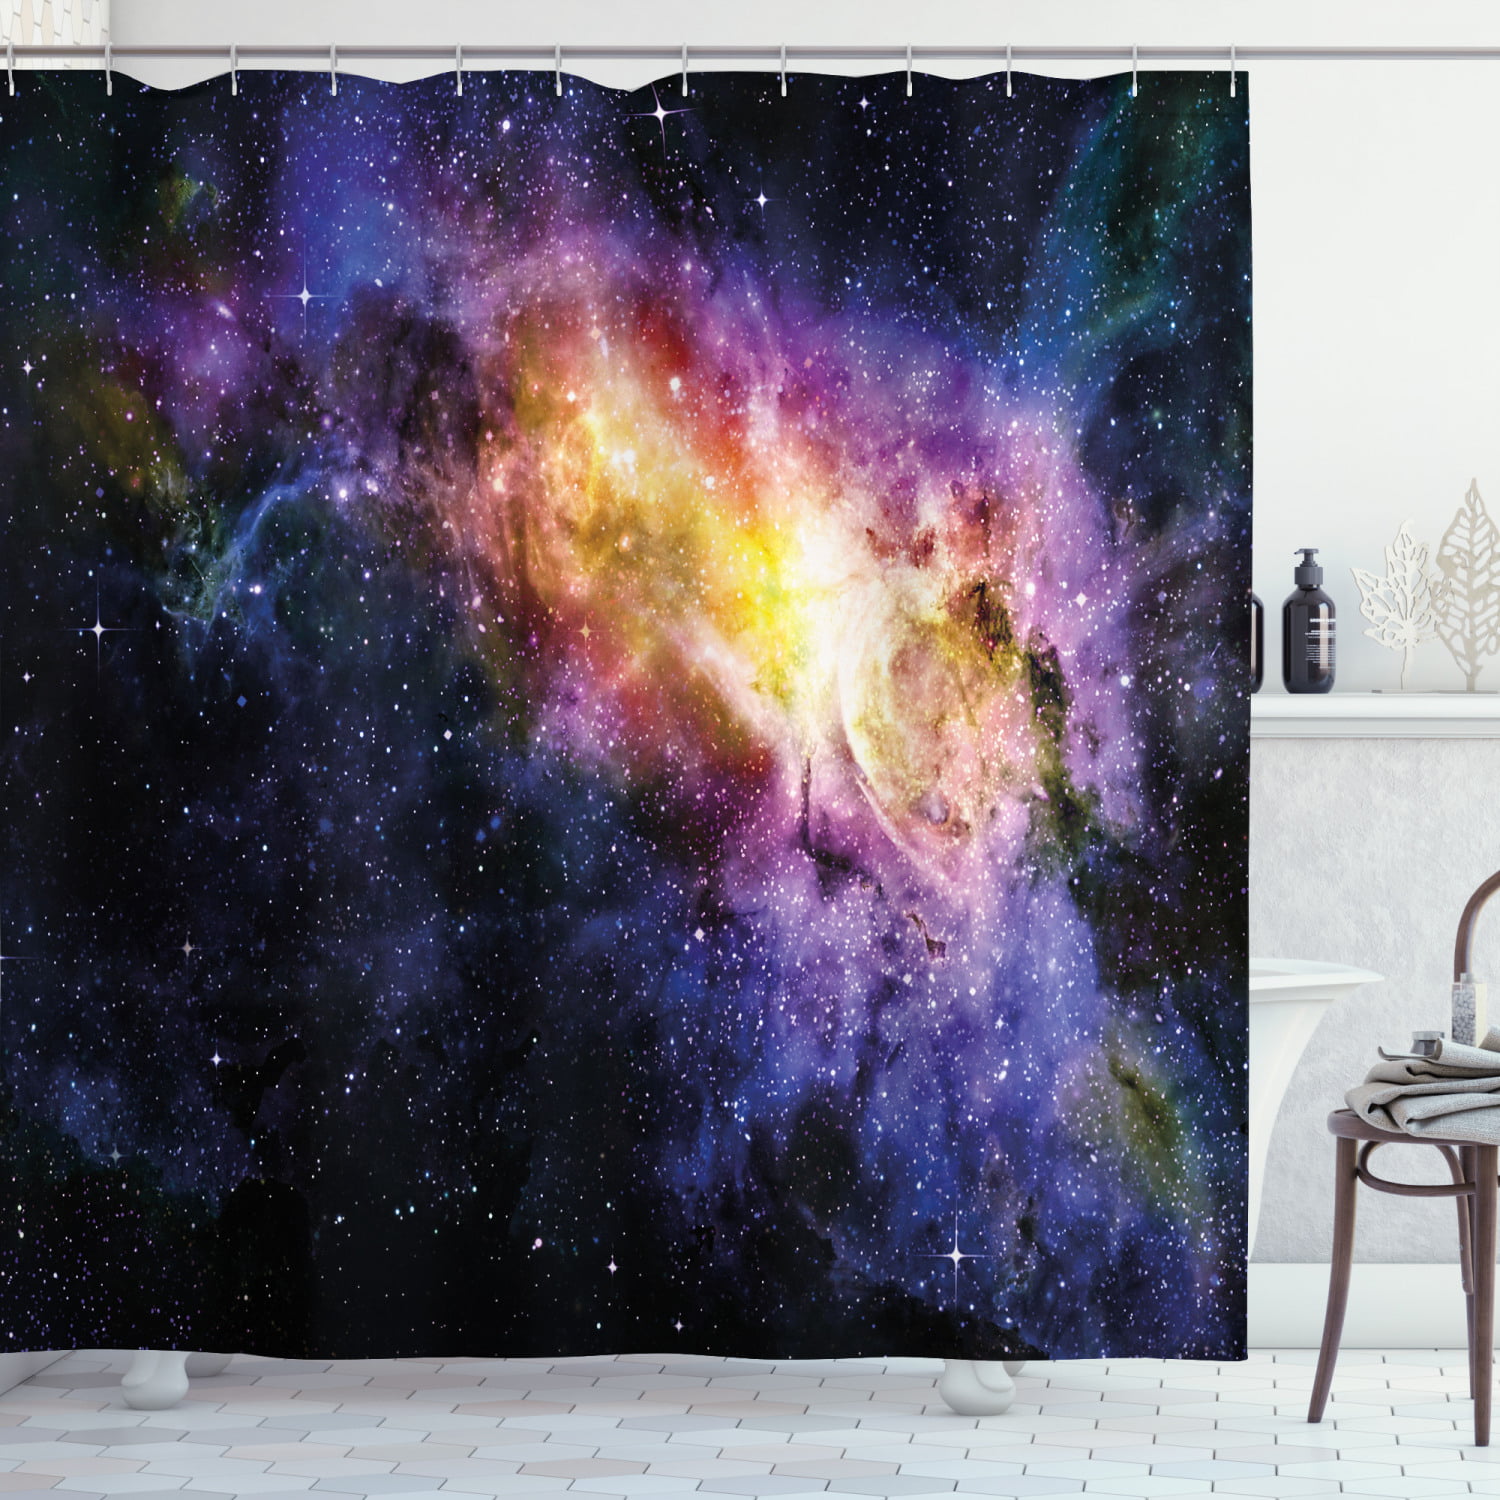 72"x72" Bathroom Waterproof Space Galaxy Nebula Fabric Shower Curtain Liner Set 